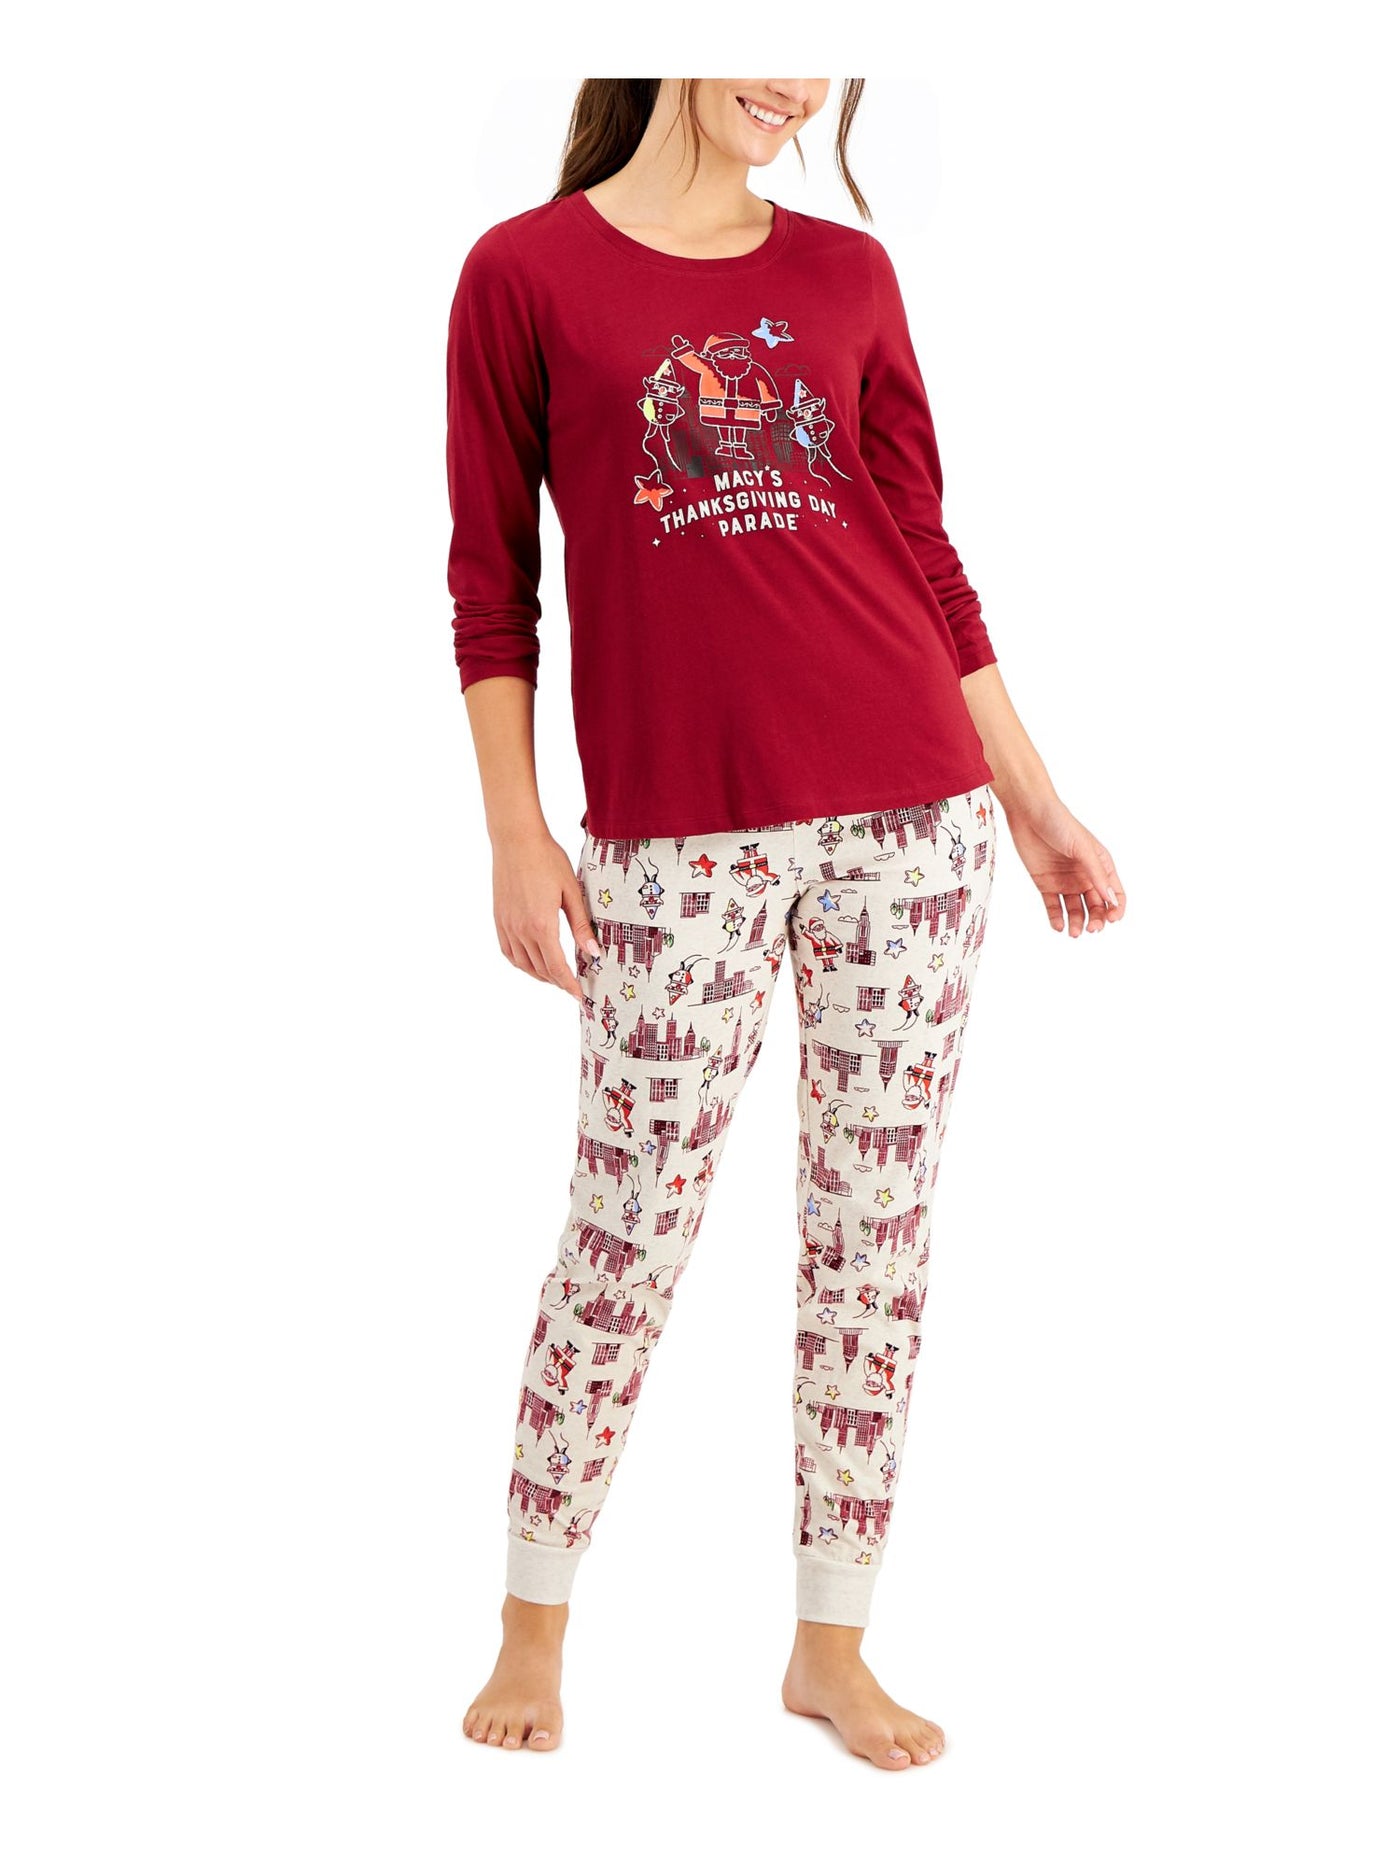 FAMILY PJs Womens Burgundy Graphic Top Elastic Band Lounge Pants Pajamas L